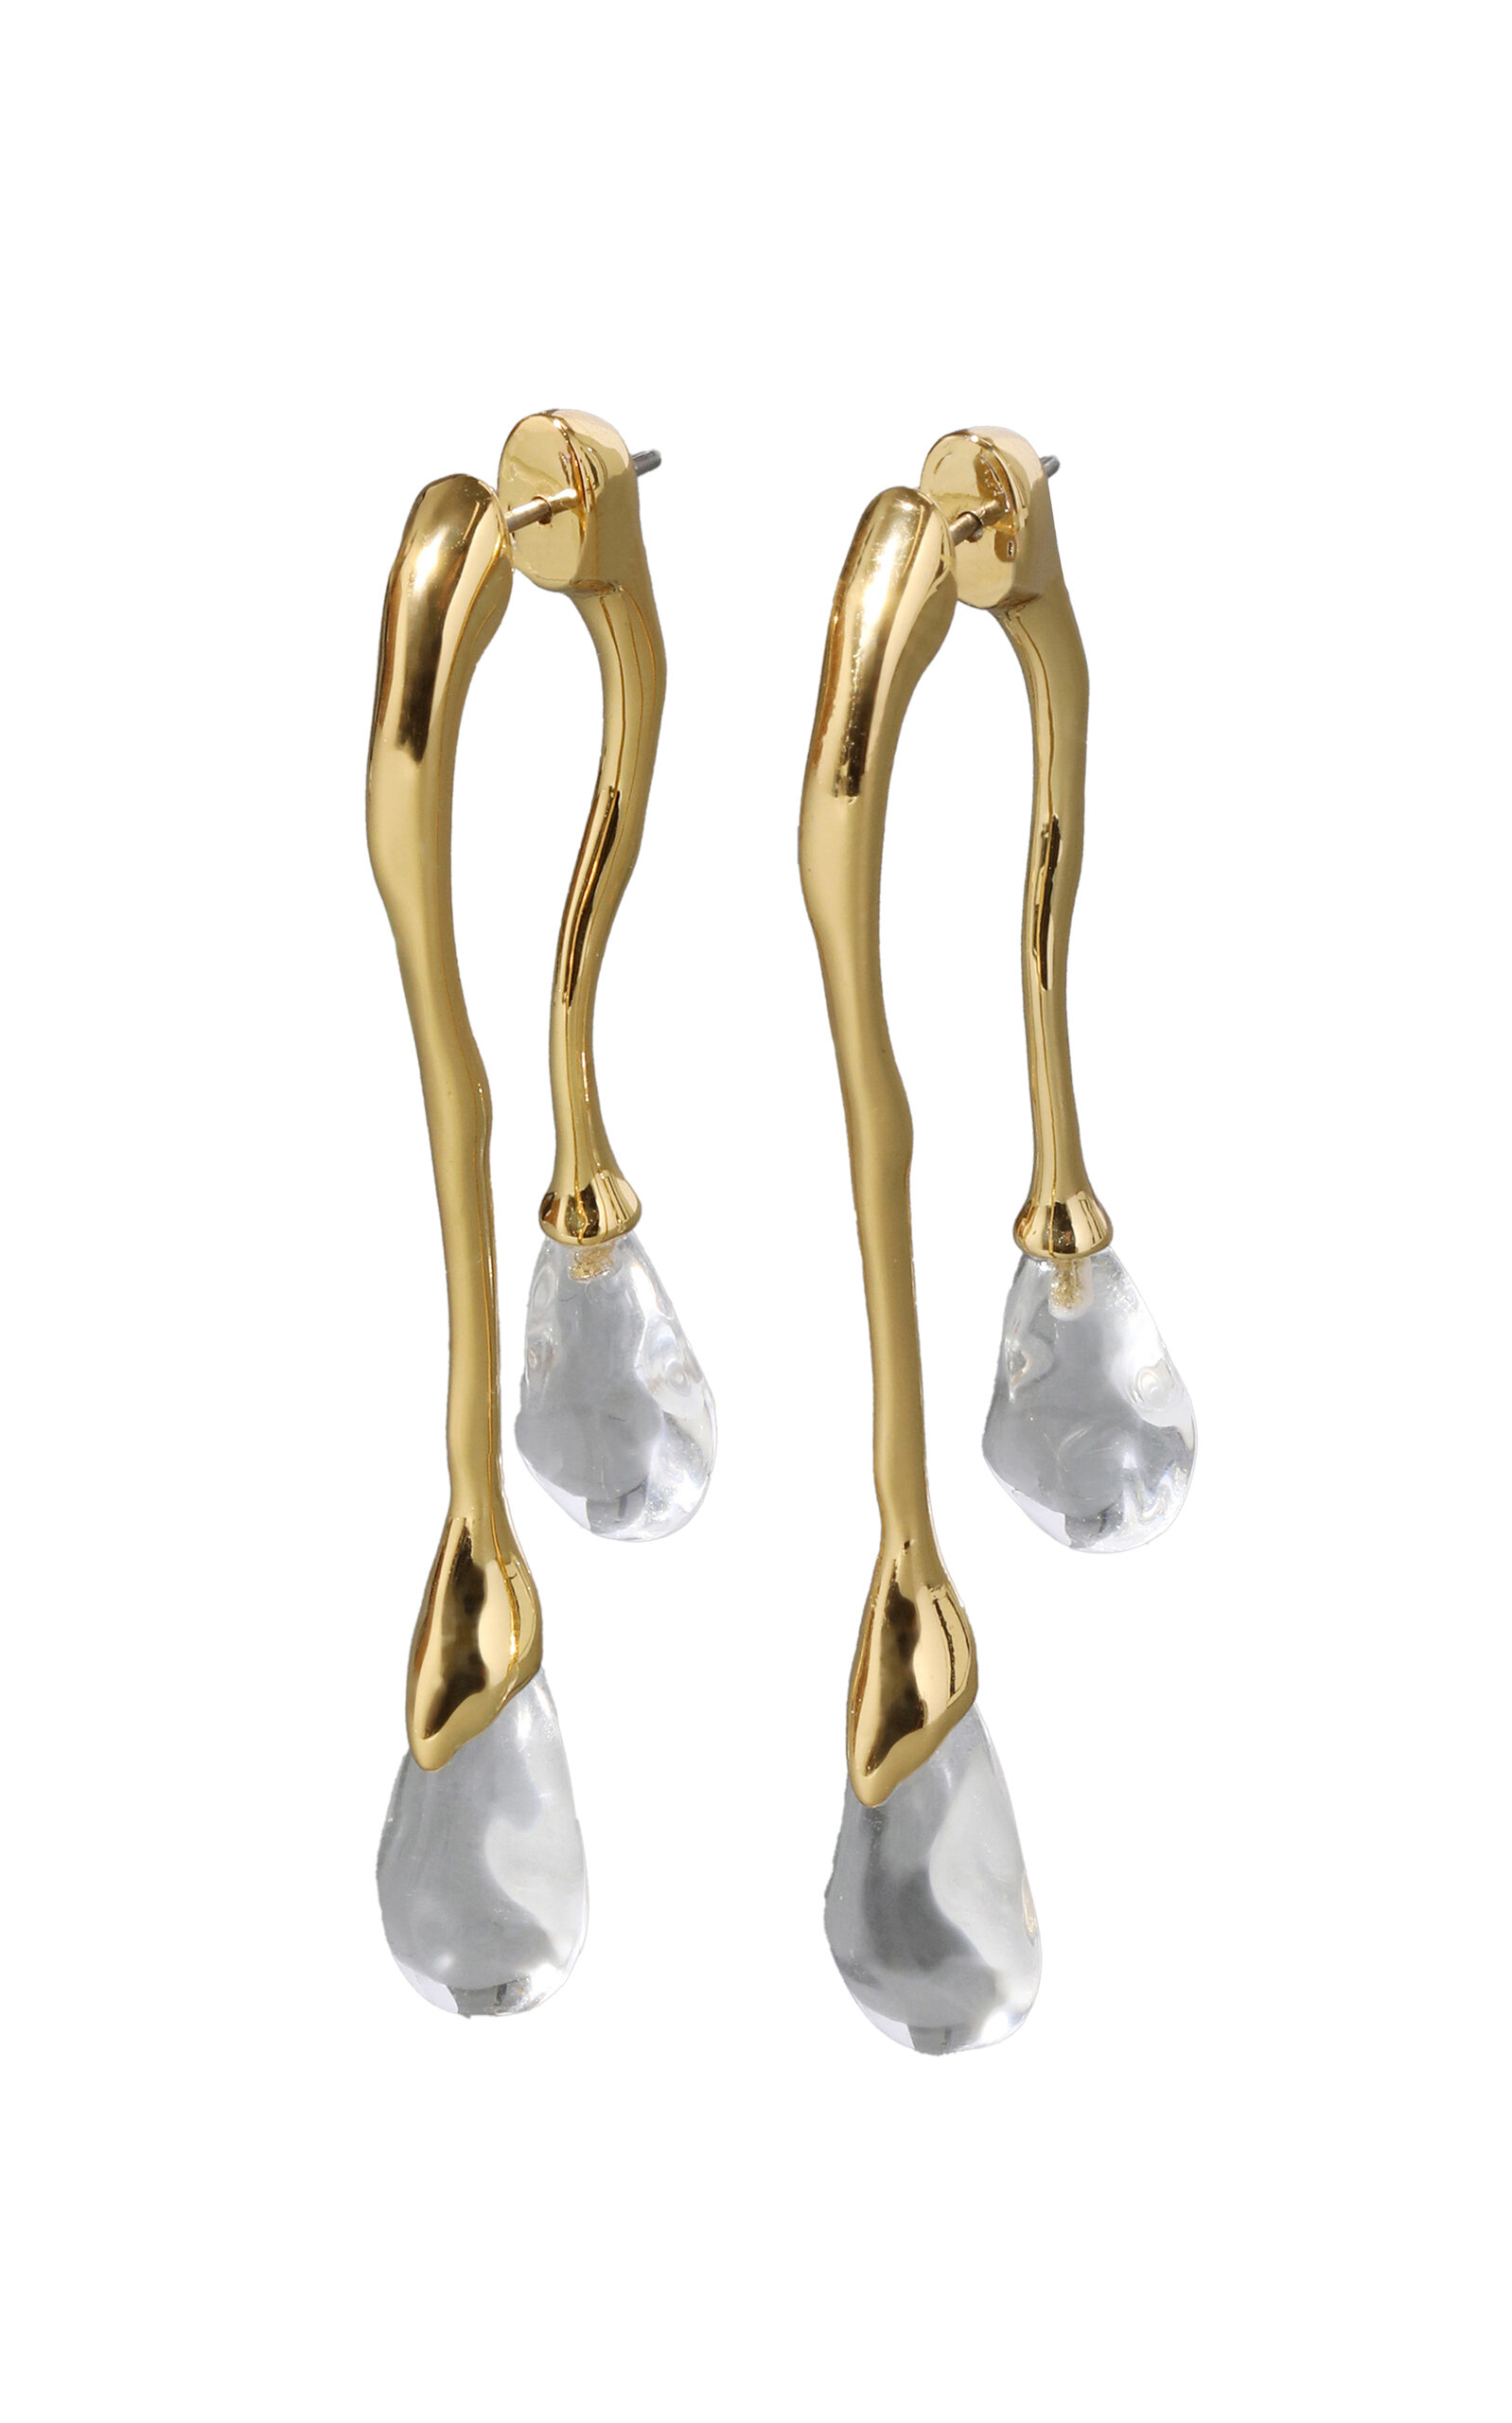 Lucite 14K Gold-Plated Earrings